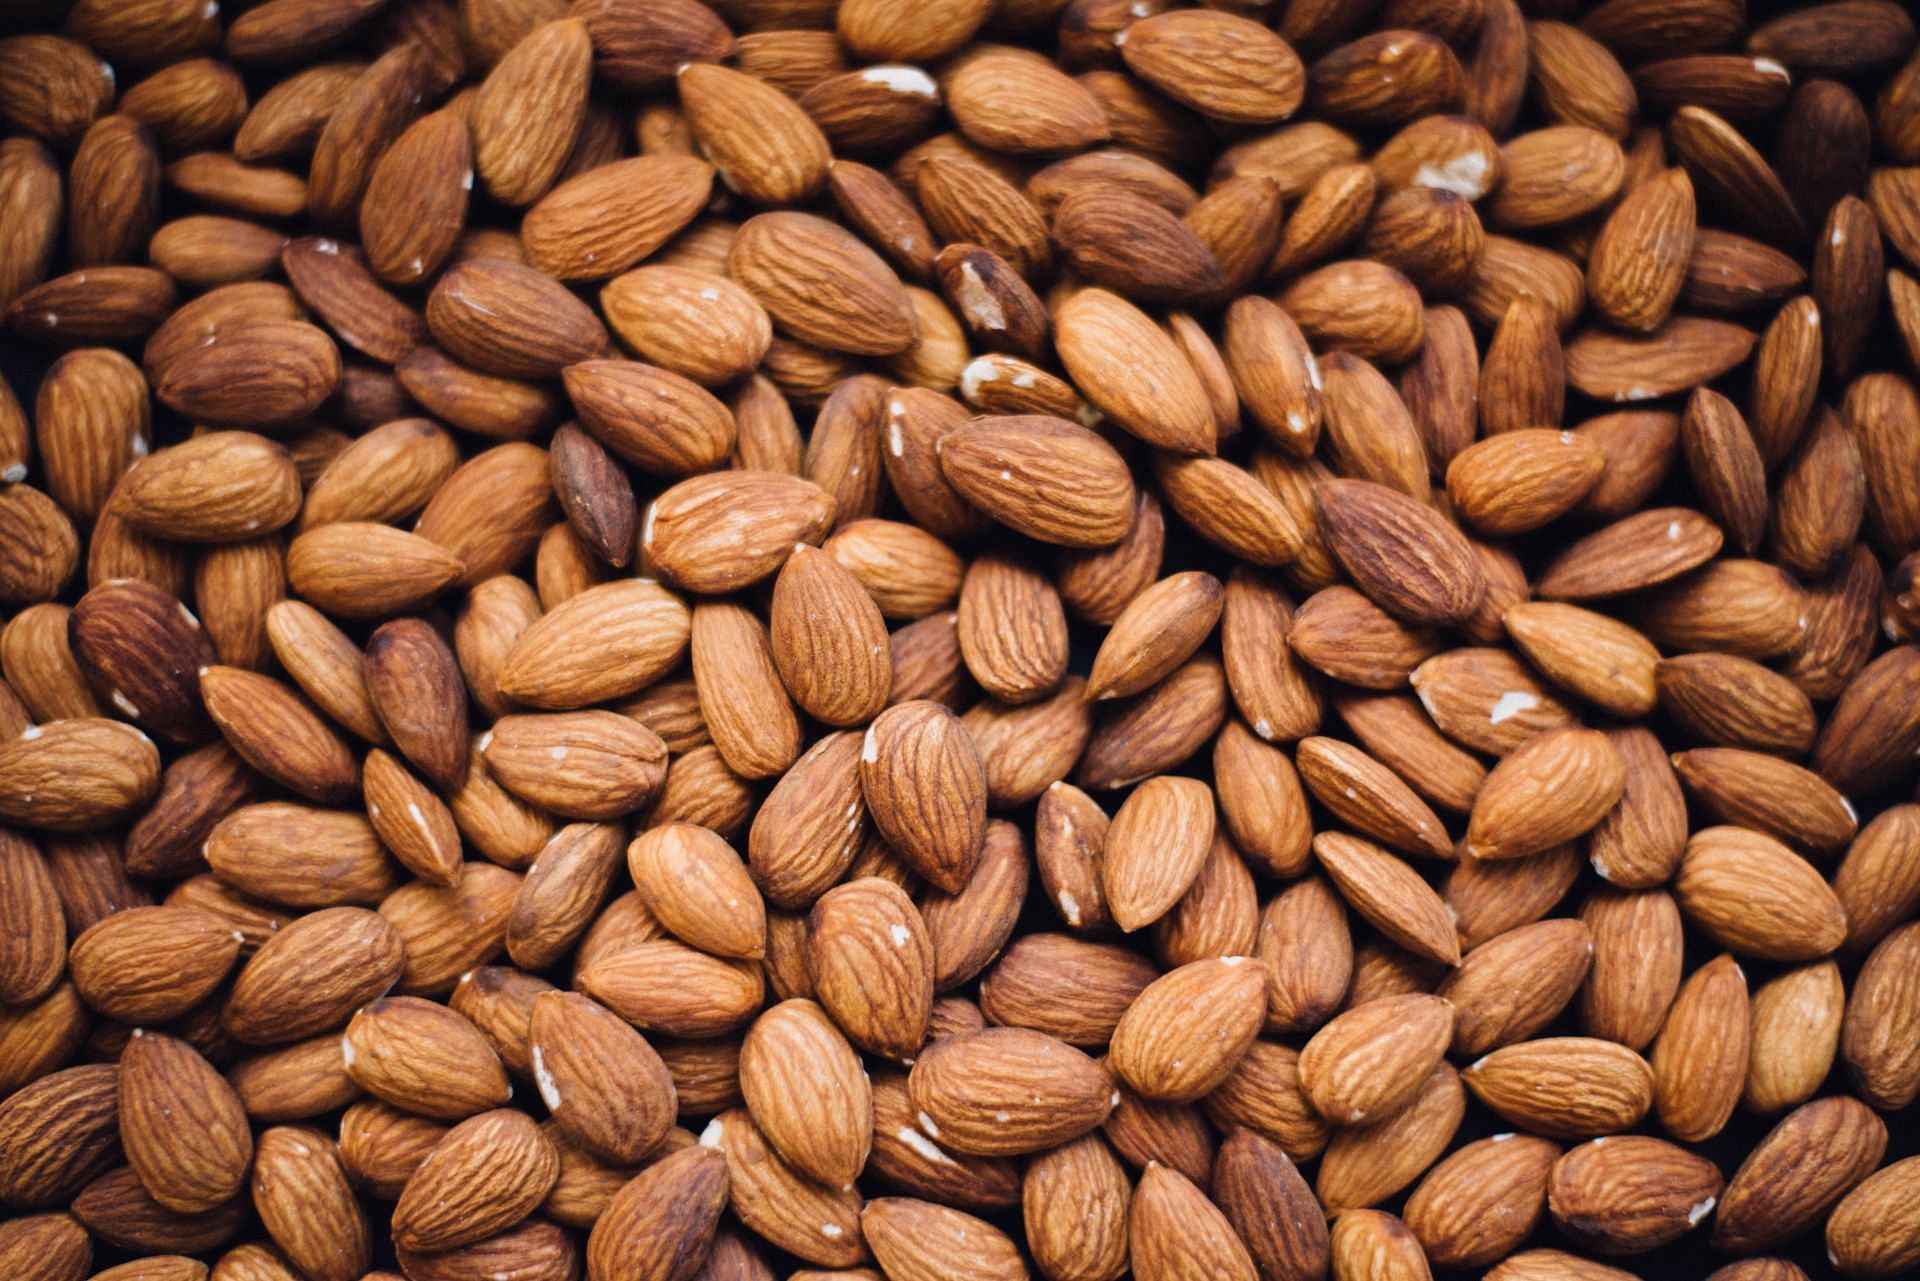 Soaked vs Unsoaked Almonds (Image via Unsplash/Chuttersnap)